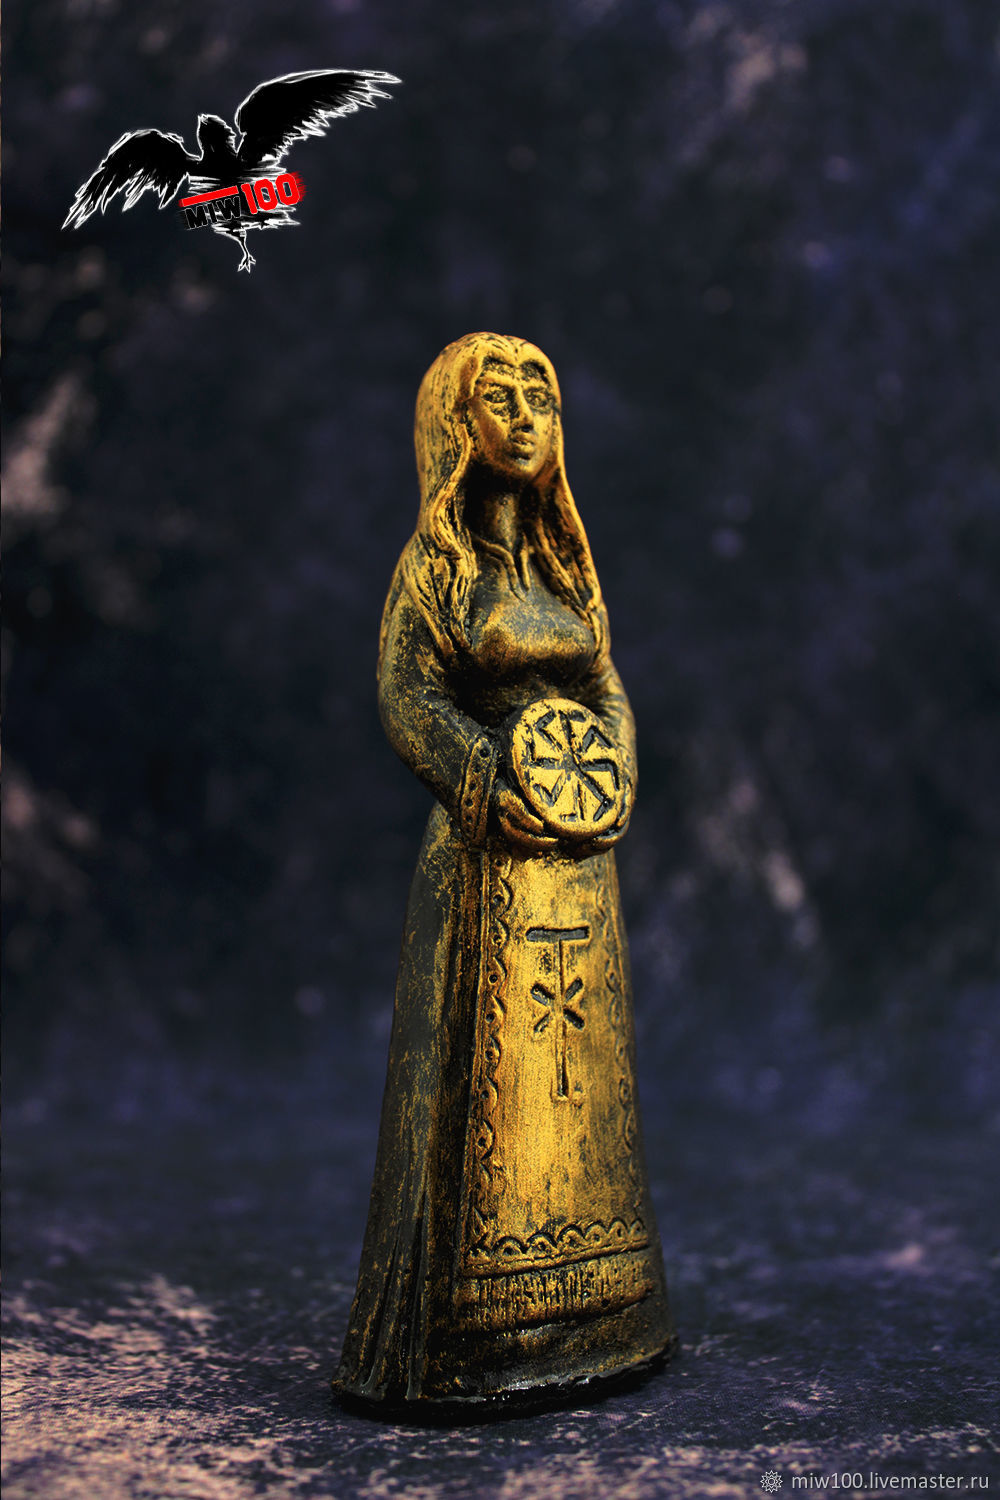 Богиня лада в славянской мифологии фото